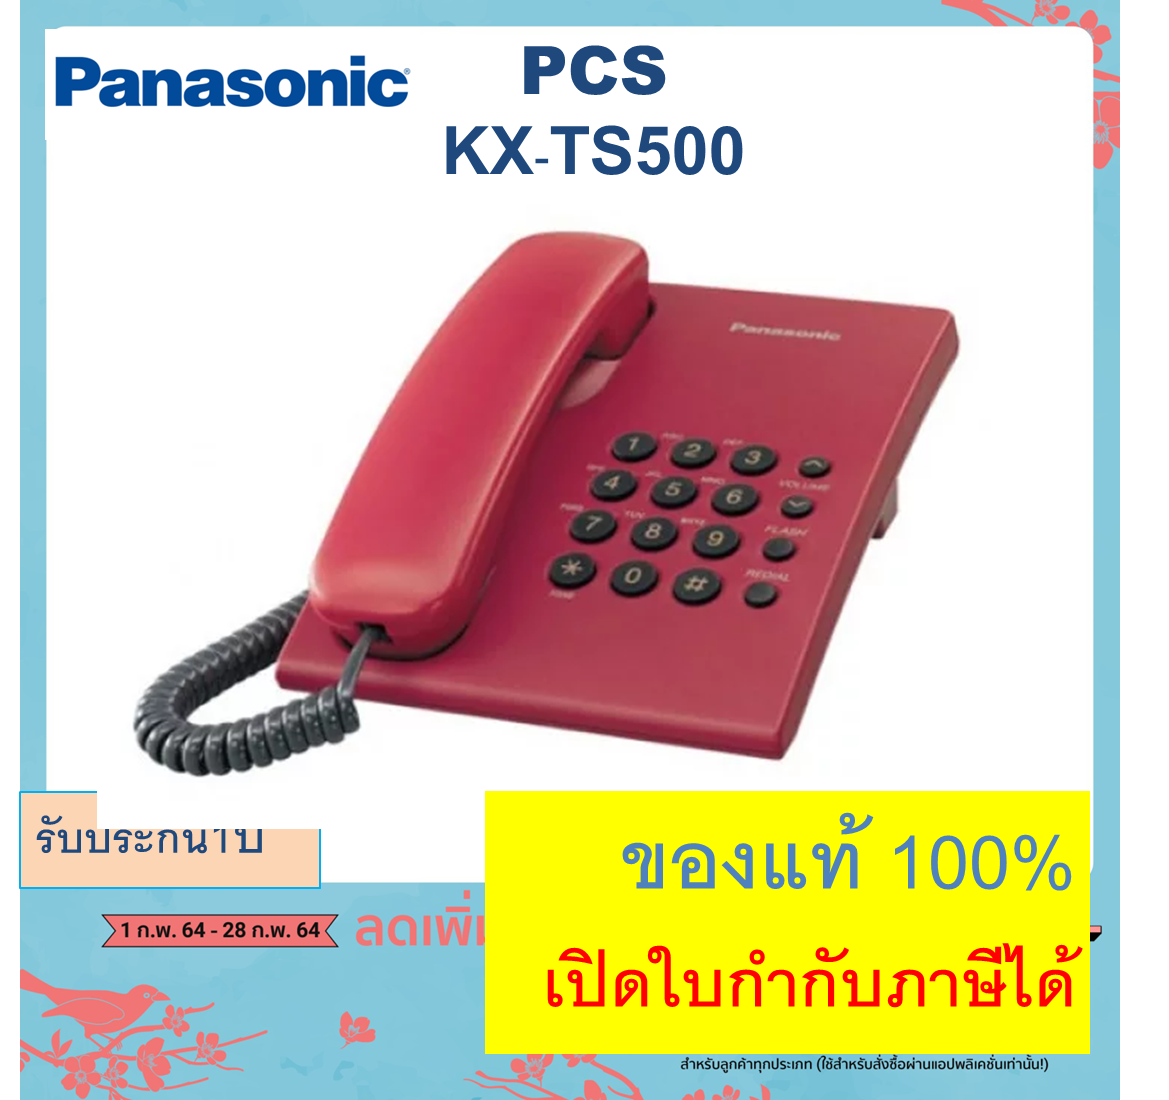 Panasonic เครื่องโทรศัพท์ kx-ts500mx โทรศัพท์สายเดียว (single line telephone) โทรศัพท์บ้านแบบตั้งโต๊ะ ออฟฟิศ สำนักงาน ใช้ร่วมกับตู้สาขา